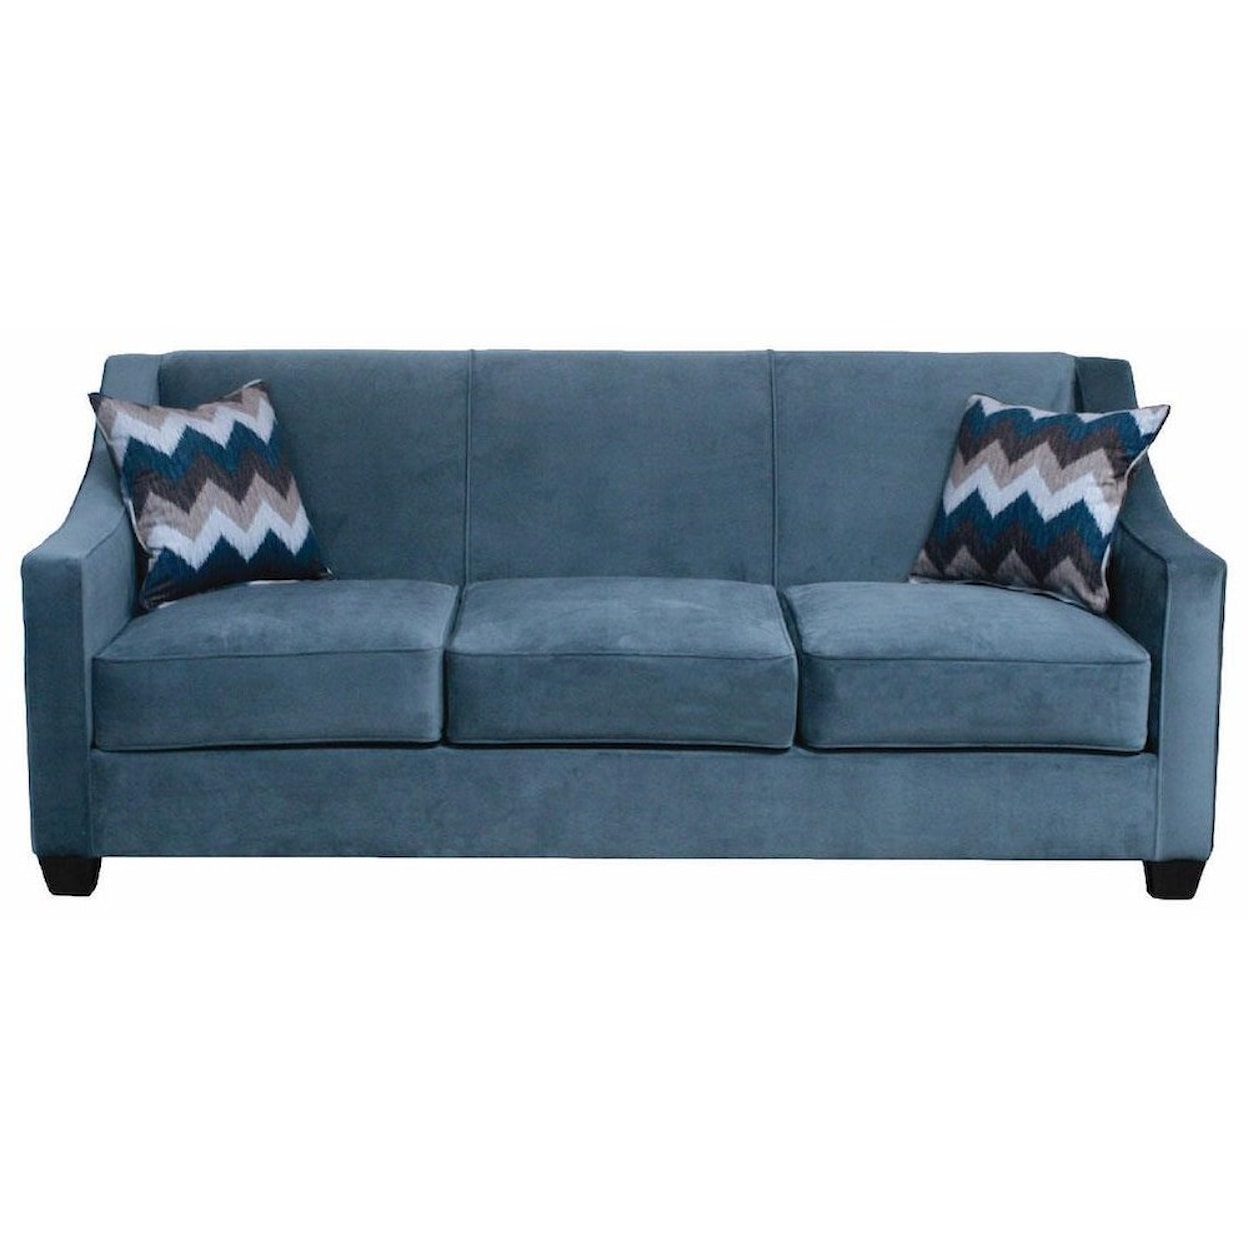 Sussex Upholstery Co. Sydney 3 Cushion Sofa